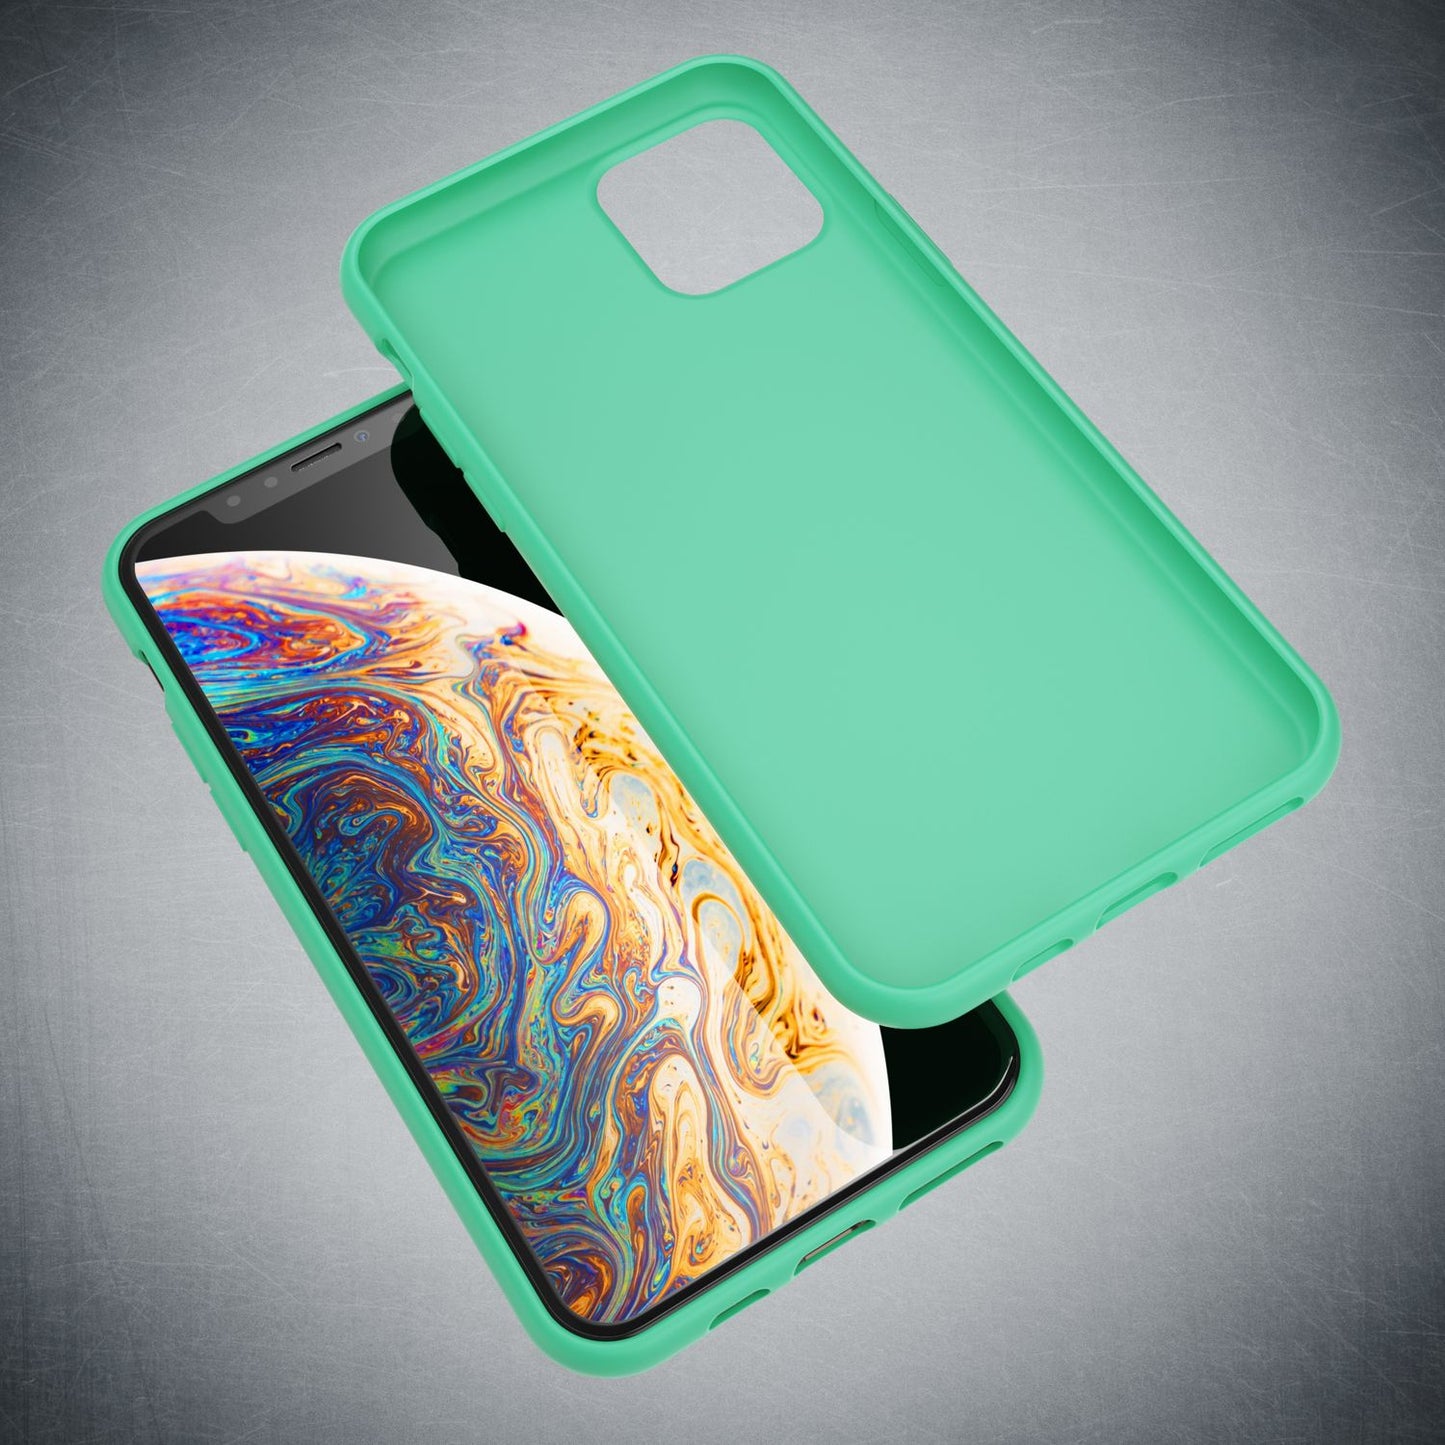 NALIA Neon Handy Hülle für iPhone 11 Pro, Slim Soft Case Silikon Bumper Cover